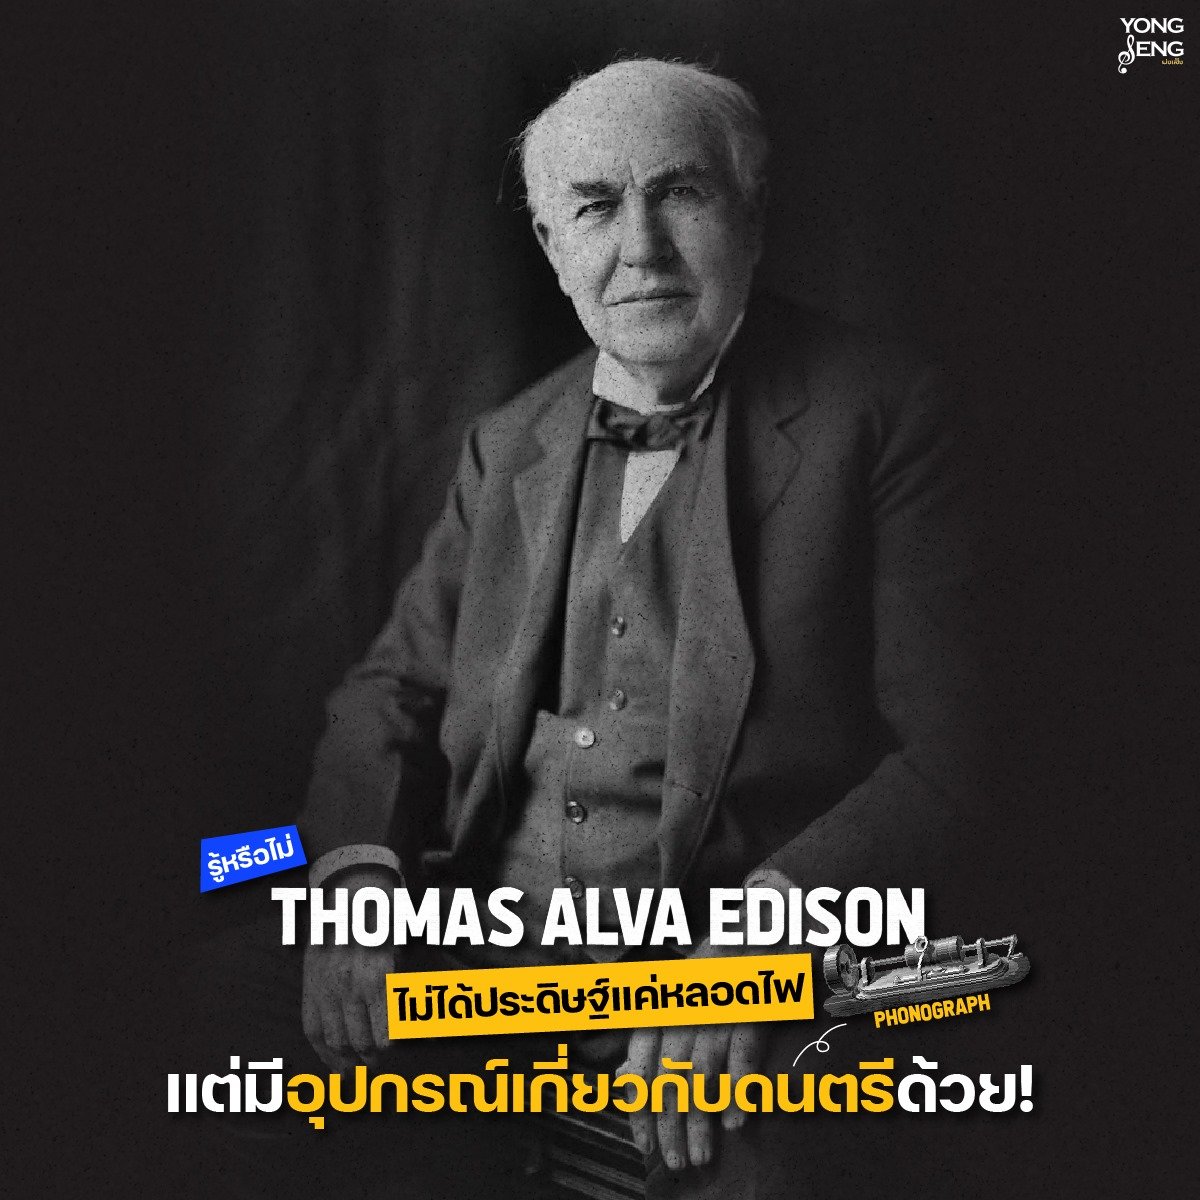 Thomas Alva Edison บุคคลที่ไม่ได้ประดิษฐ์แค่หลอดไฟ!